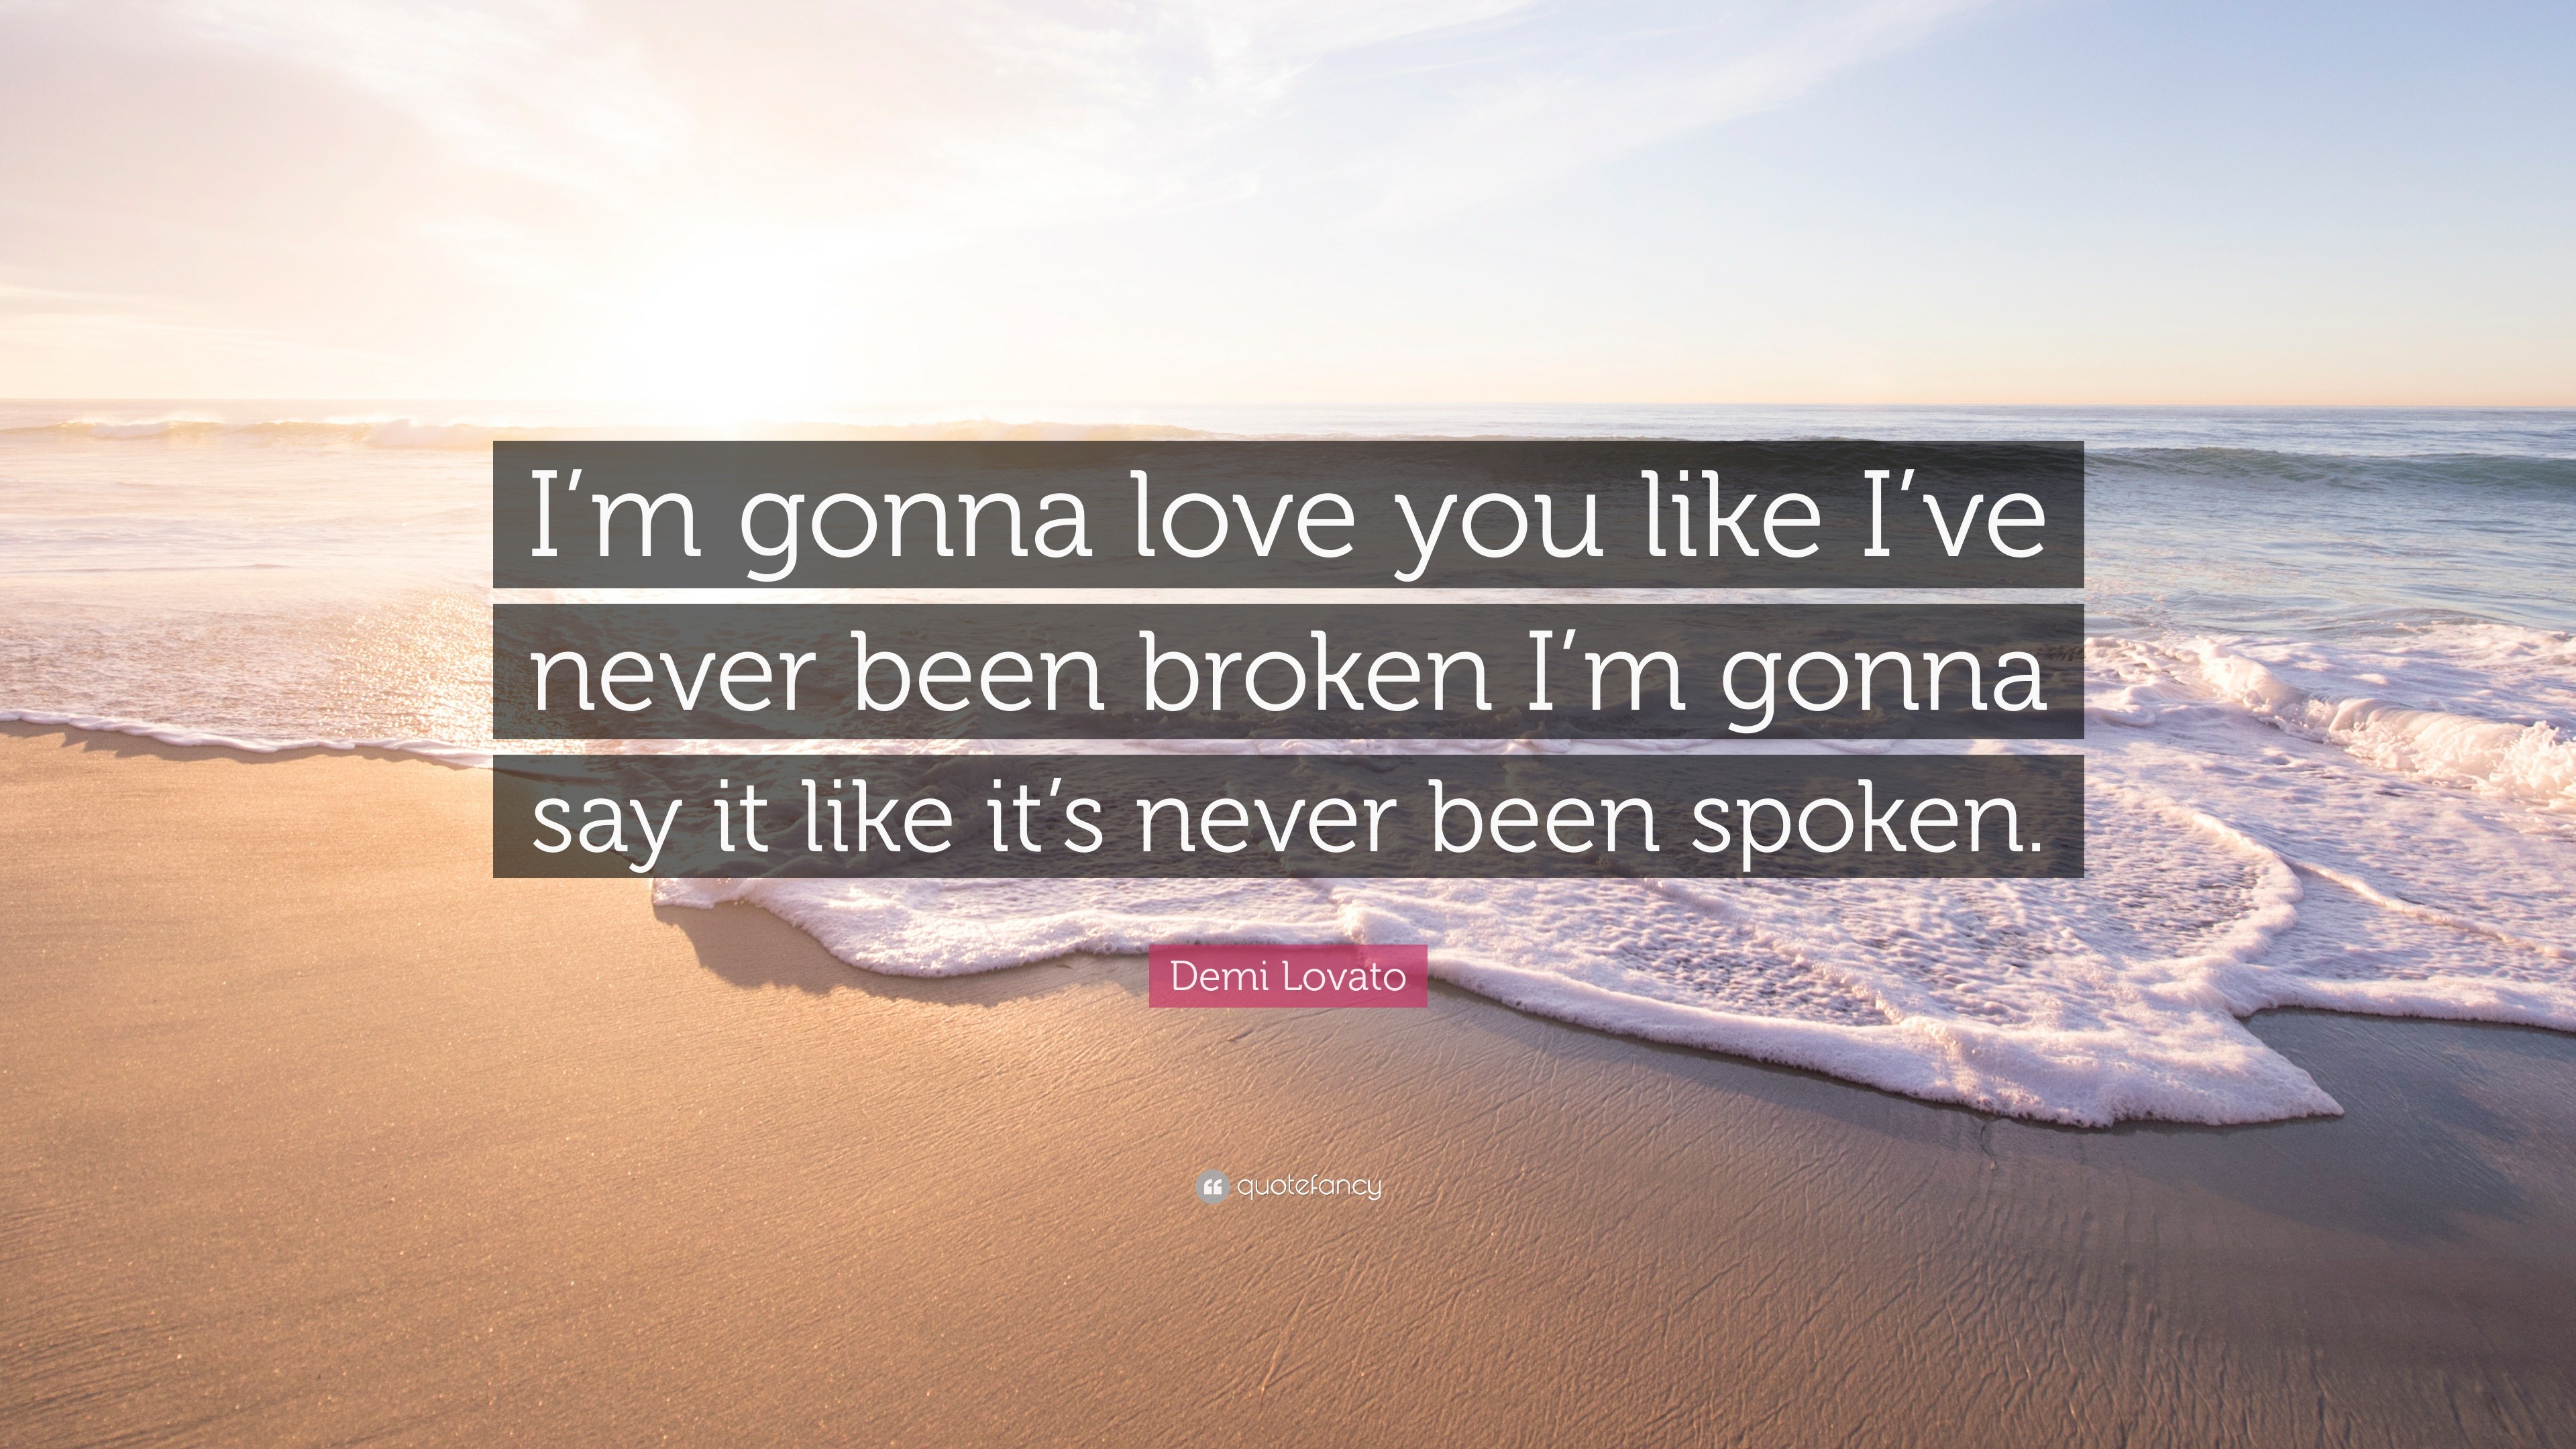 Demi Lovato Quote “I m gonna love you like I ve never